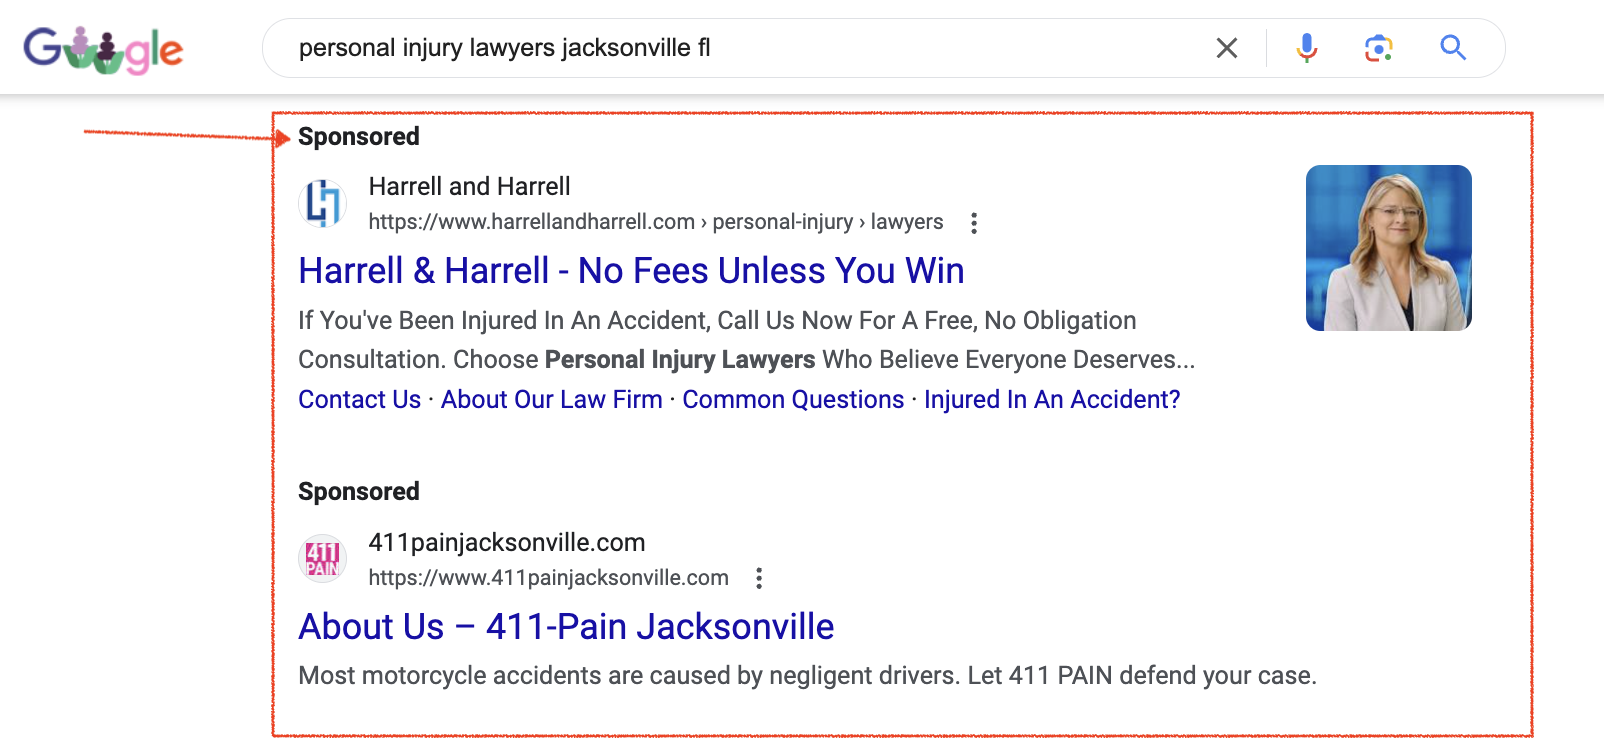 Personal injury lawyers jacksonville fl